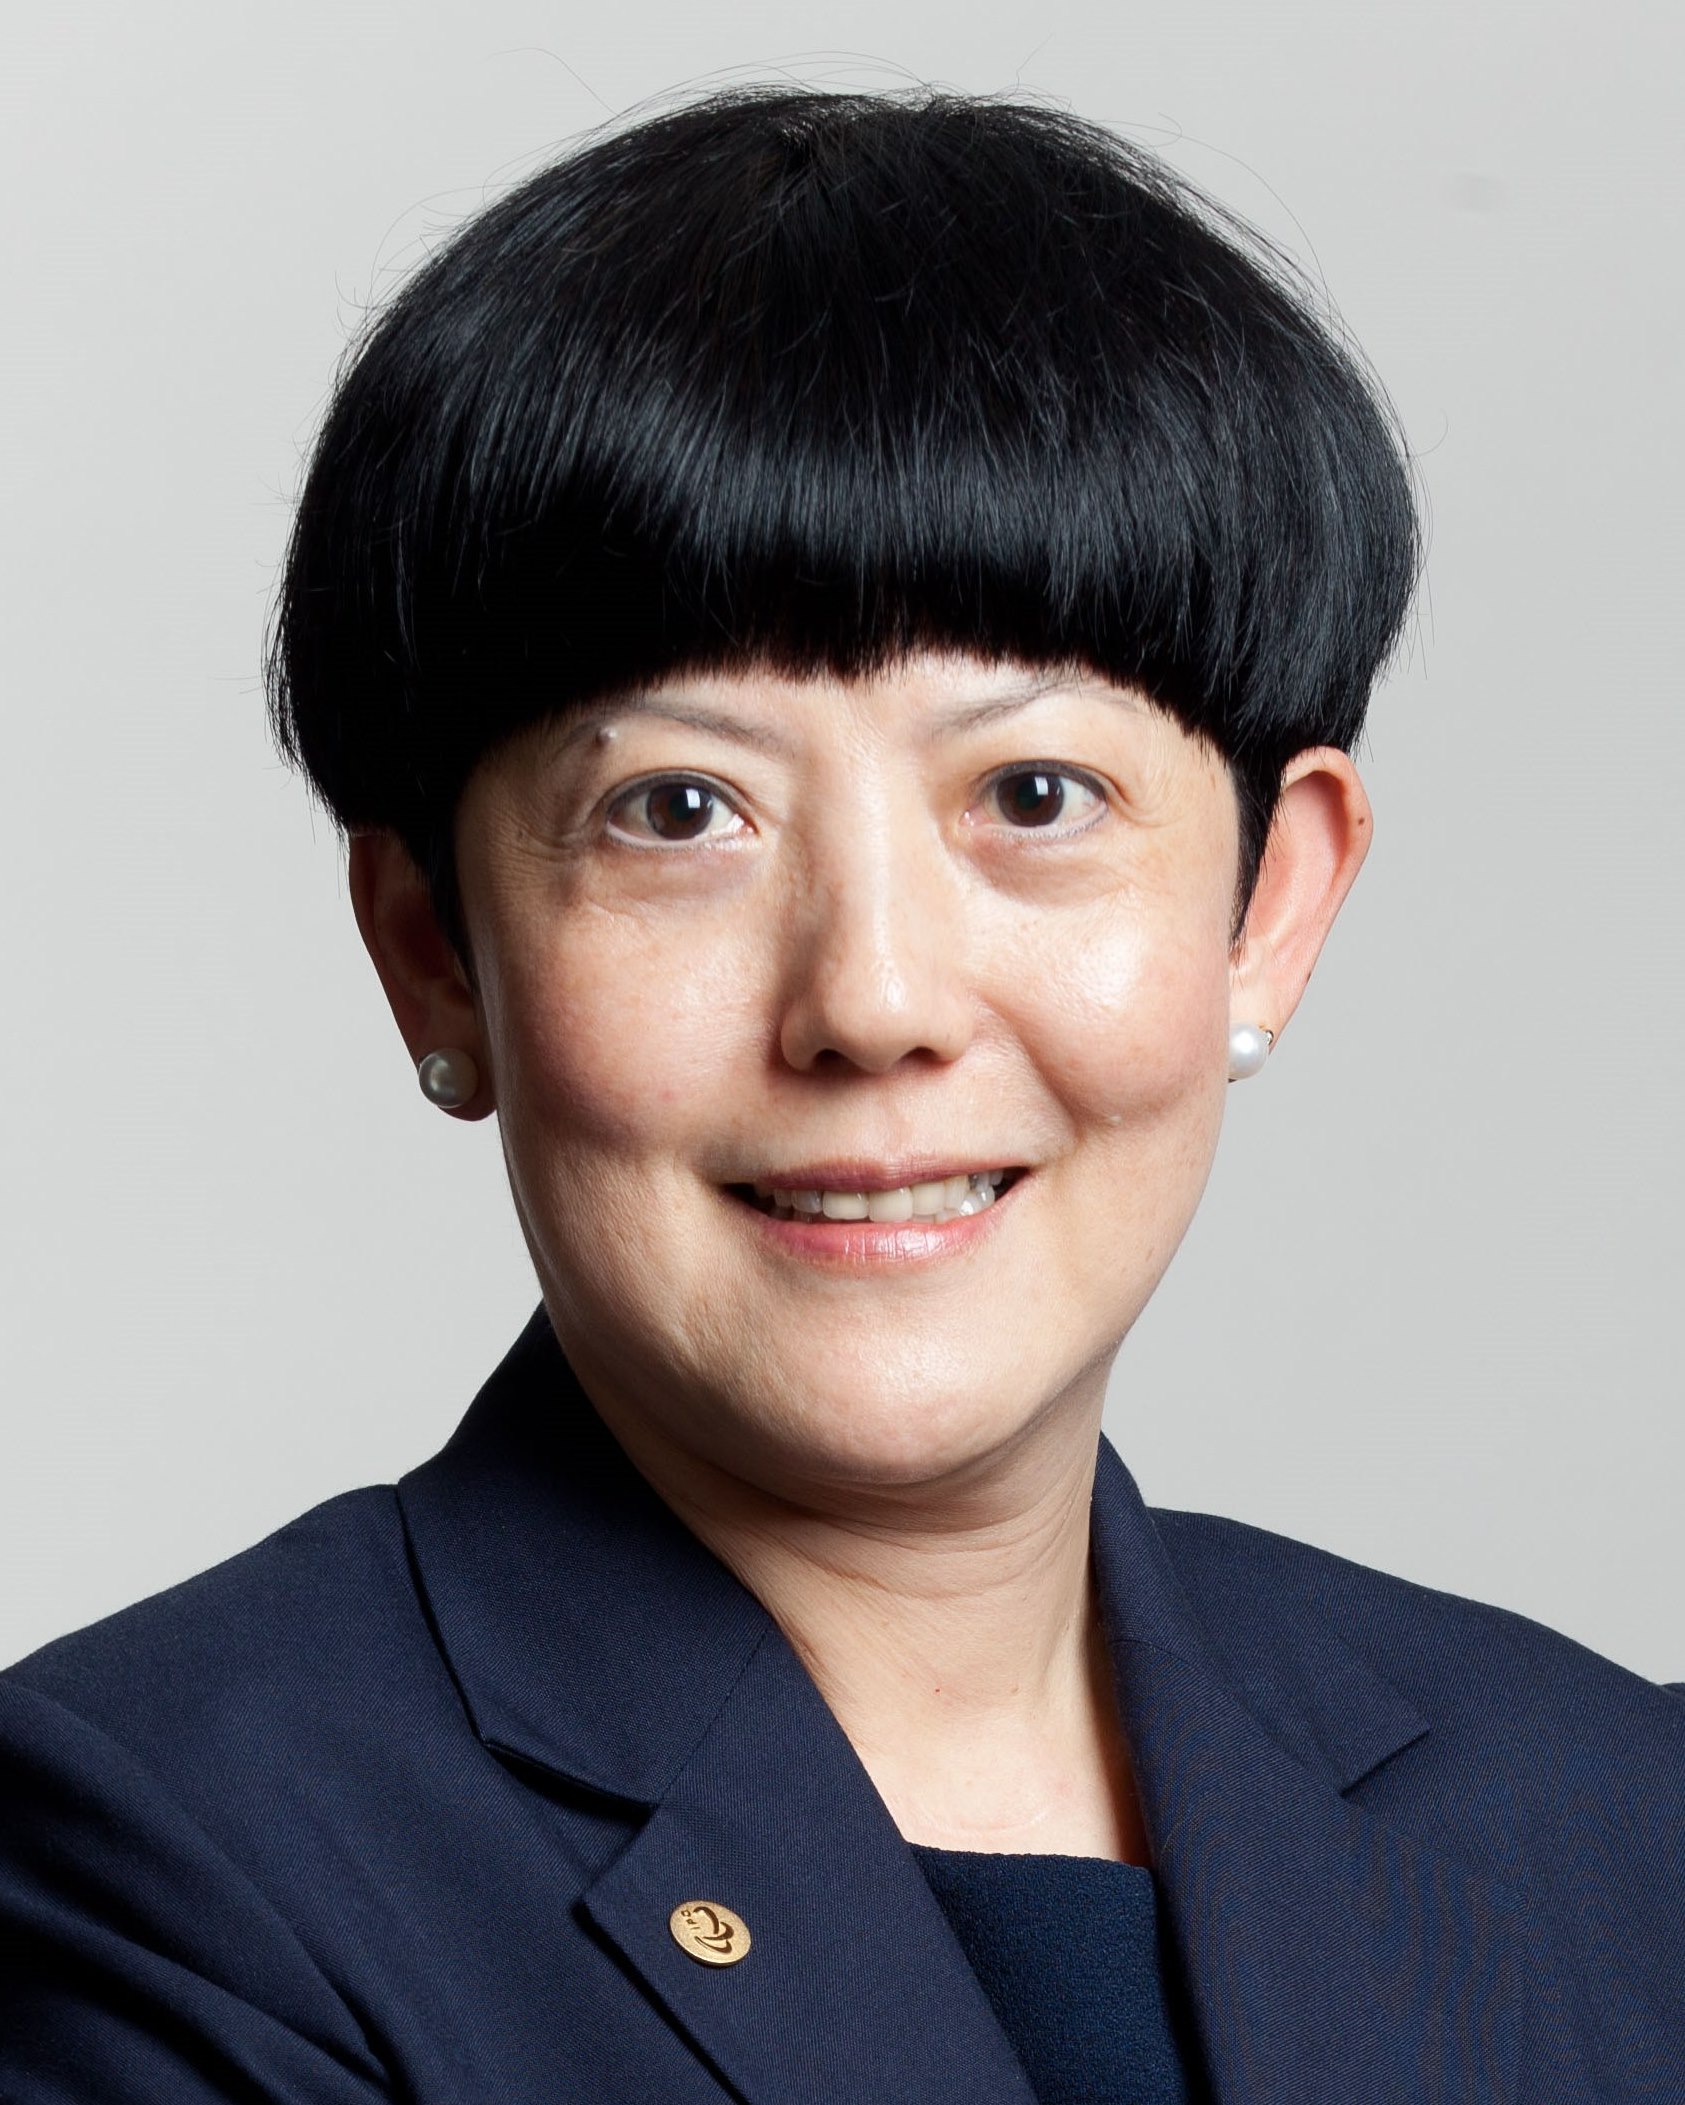 香港残疾人奥委会 会长 冯马洁娴 Hong Kong Paralympic Committee President Jenny Fung 